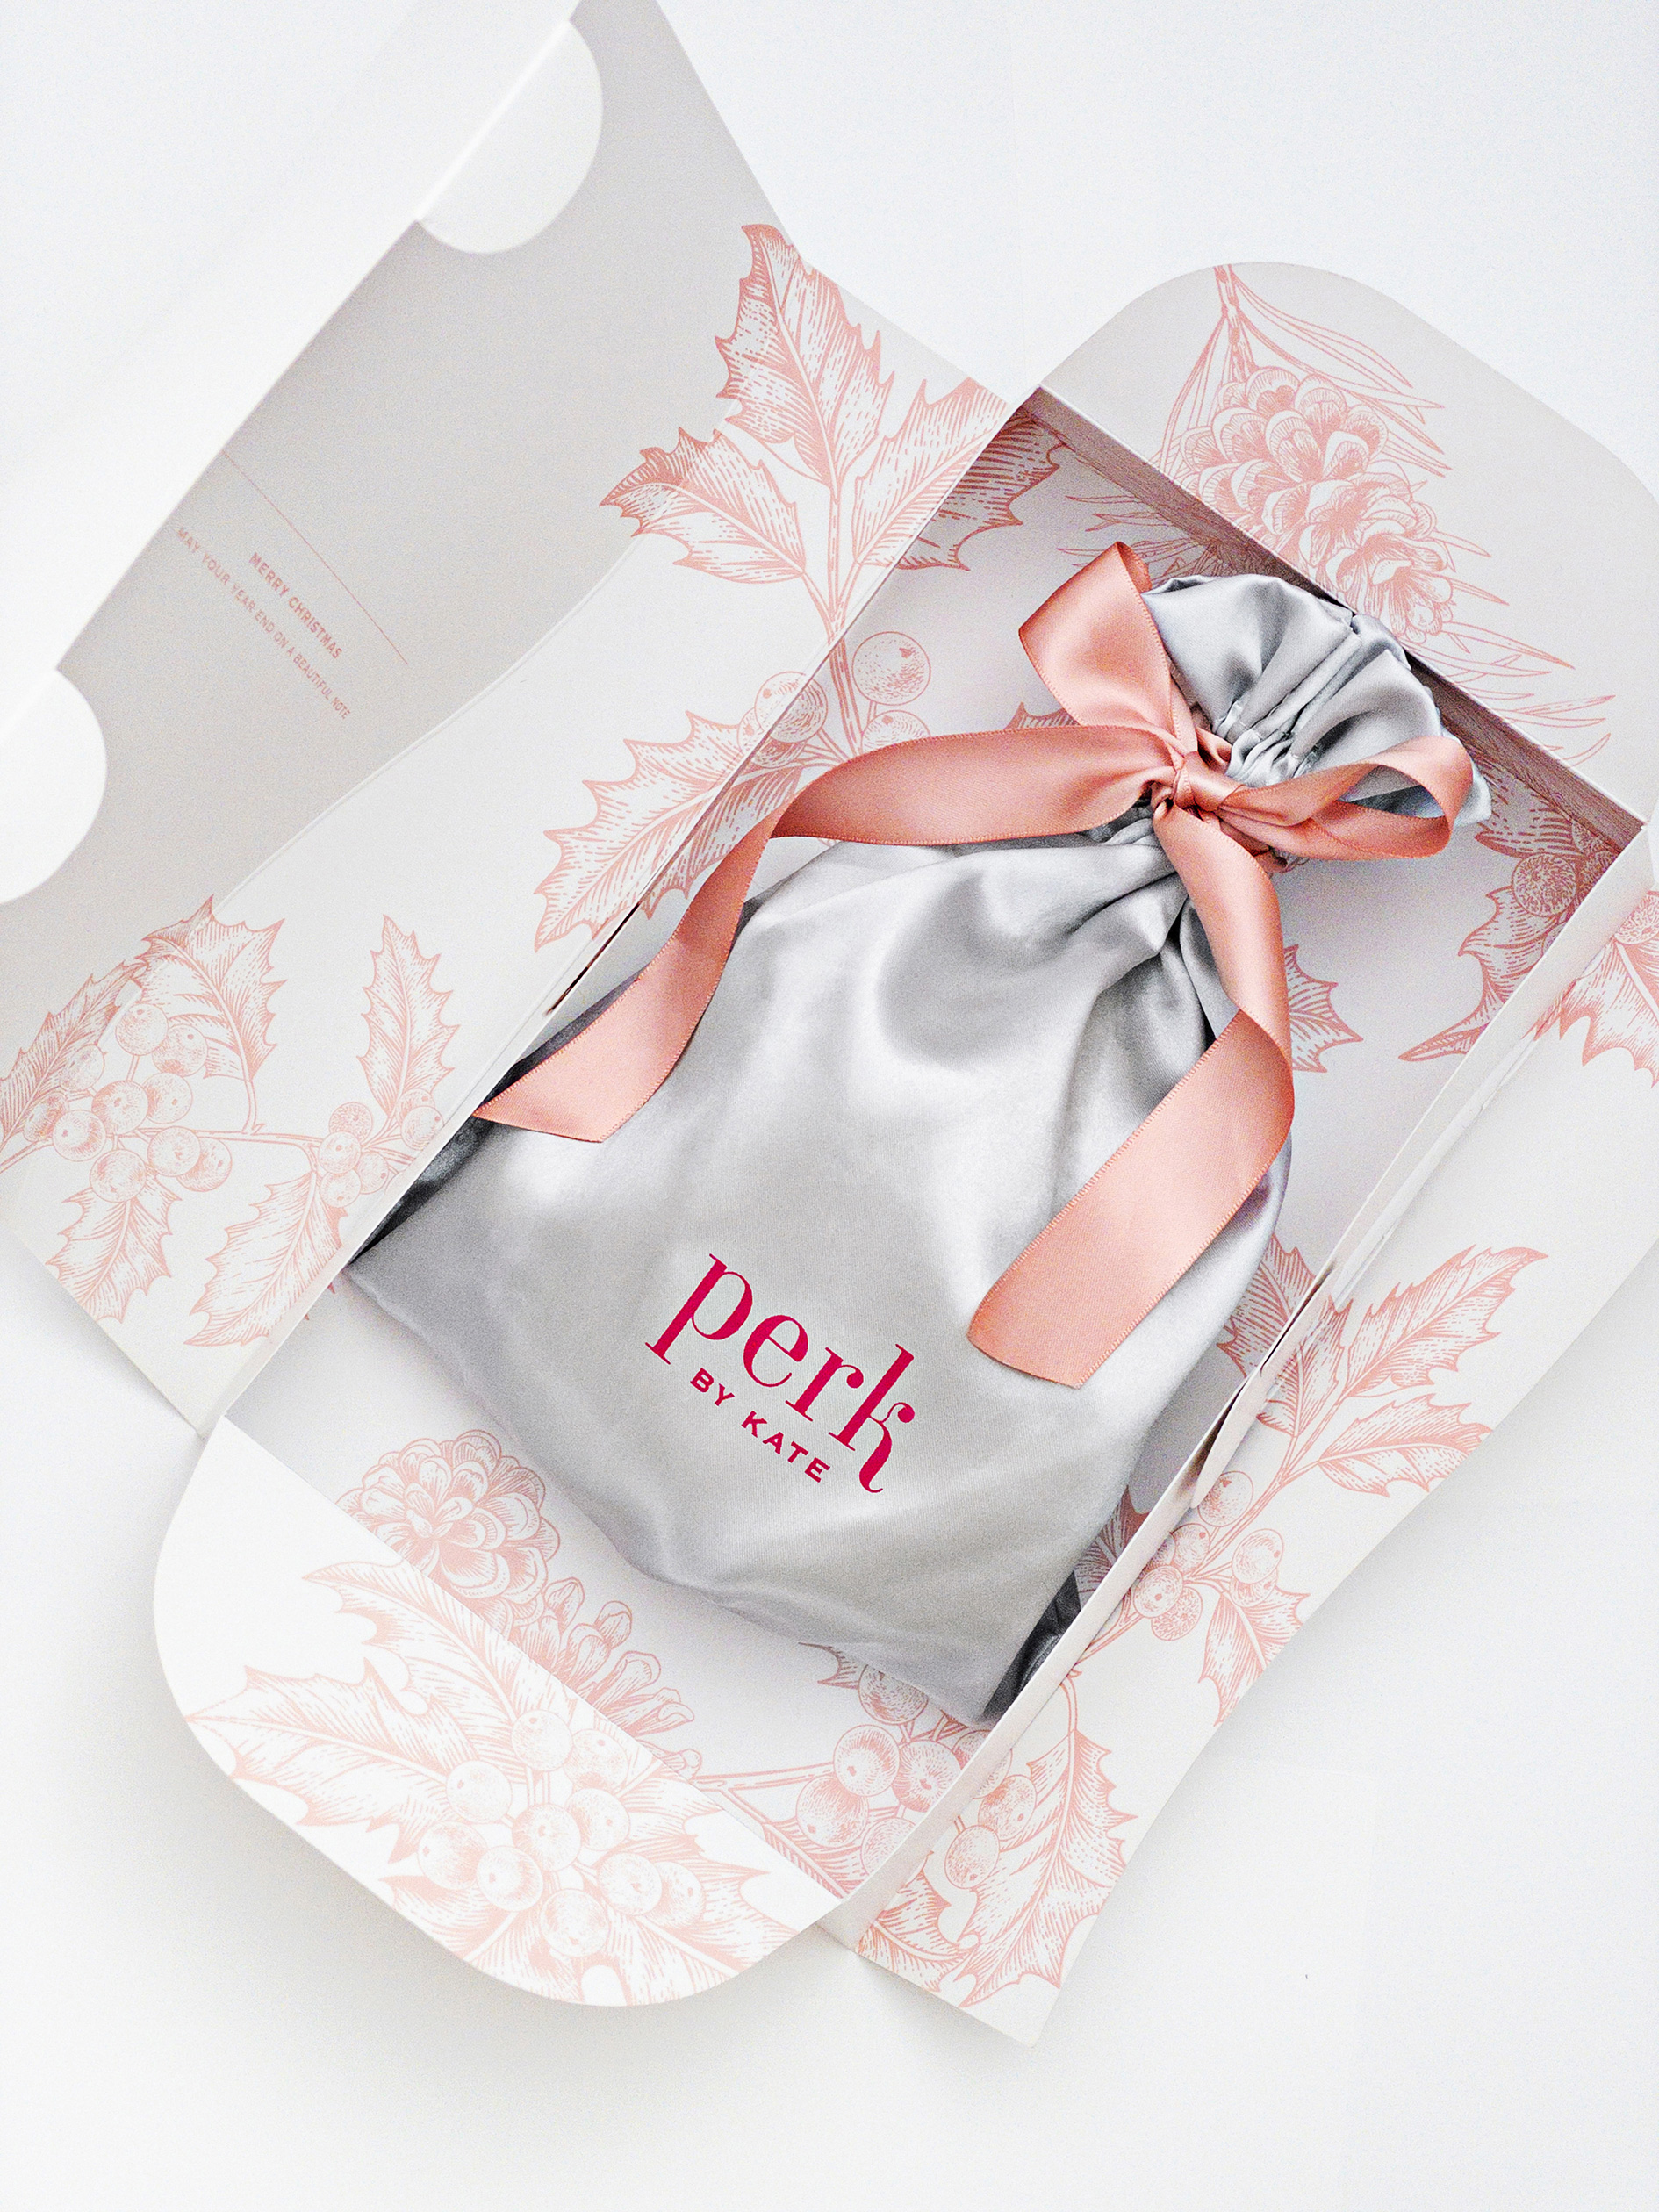 Christmas Edition Packaging Designed by POPfolio for Perkbykate